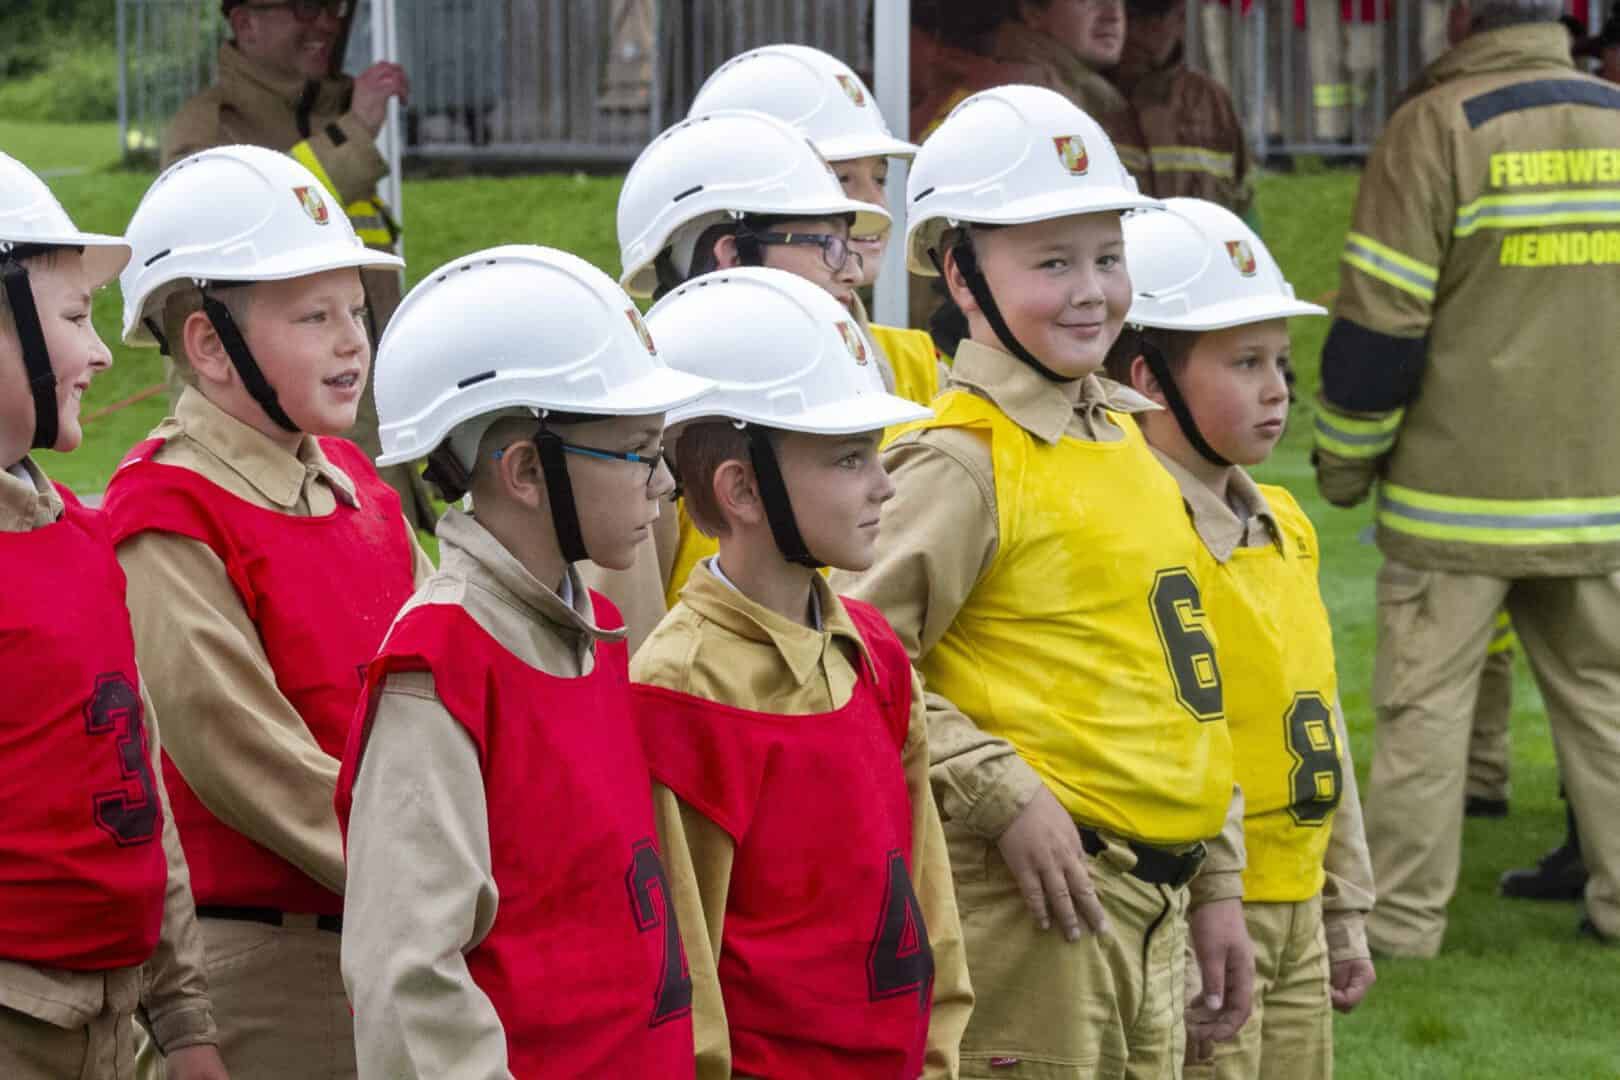 FELIX & ÖBFV Feuerwehrjugend Fördertopf: 2. Runde startet im Juli